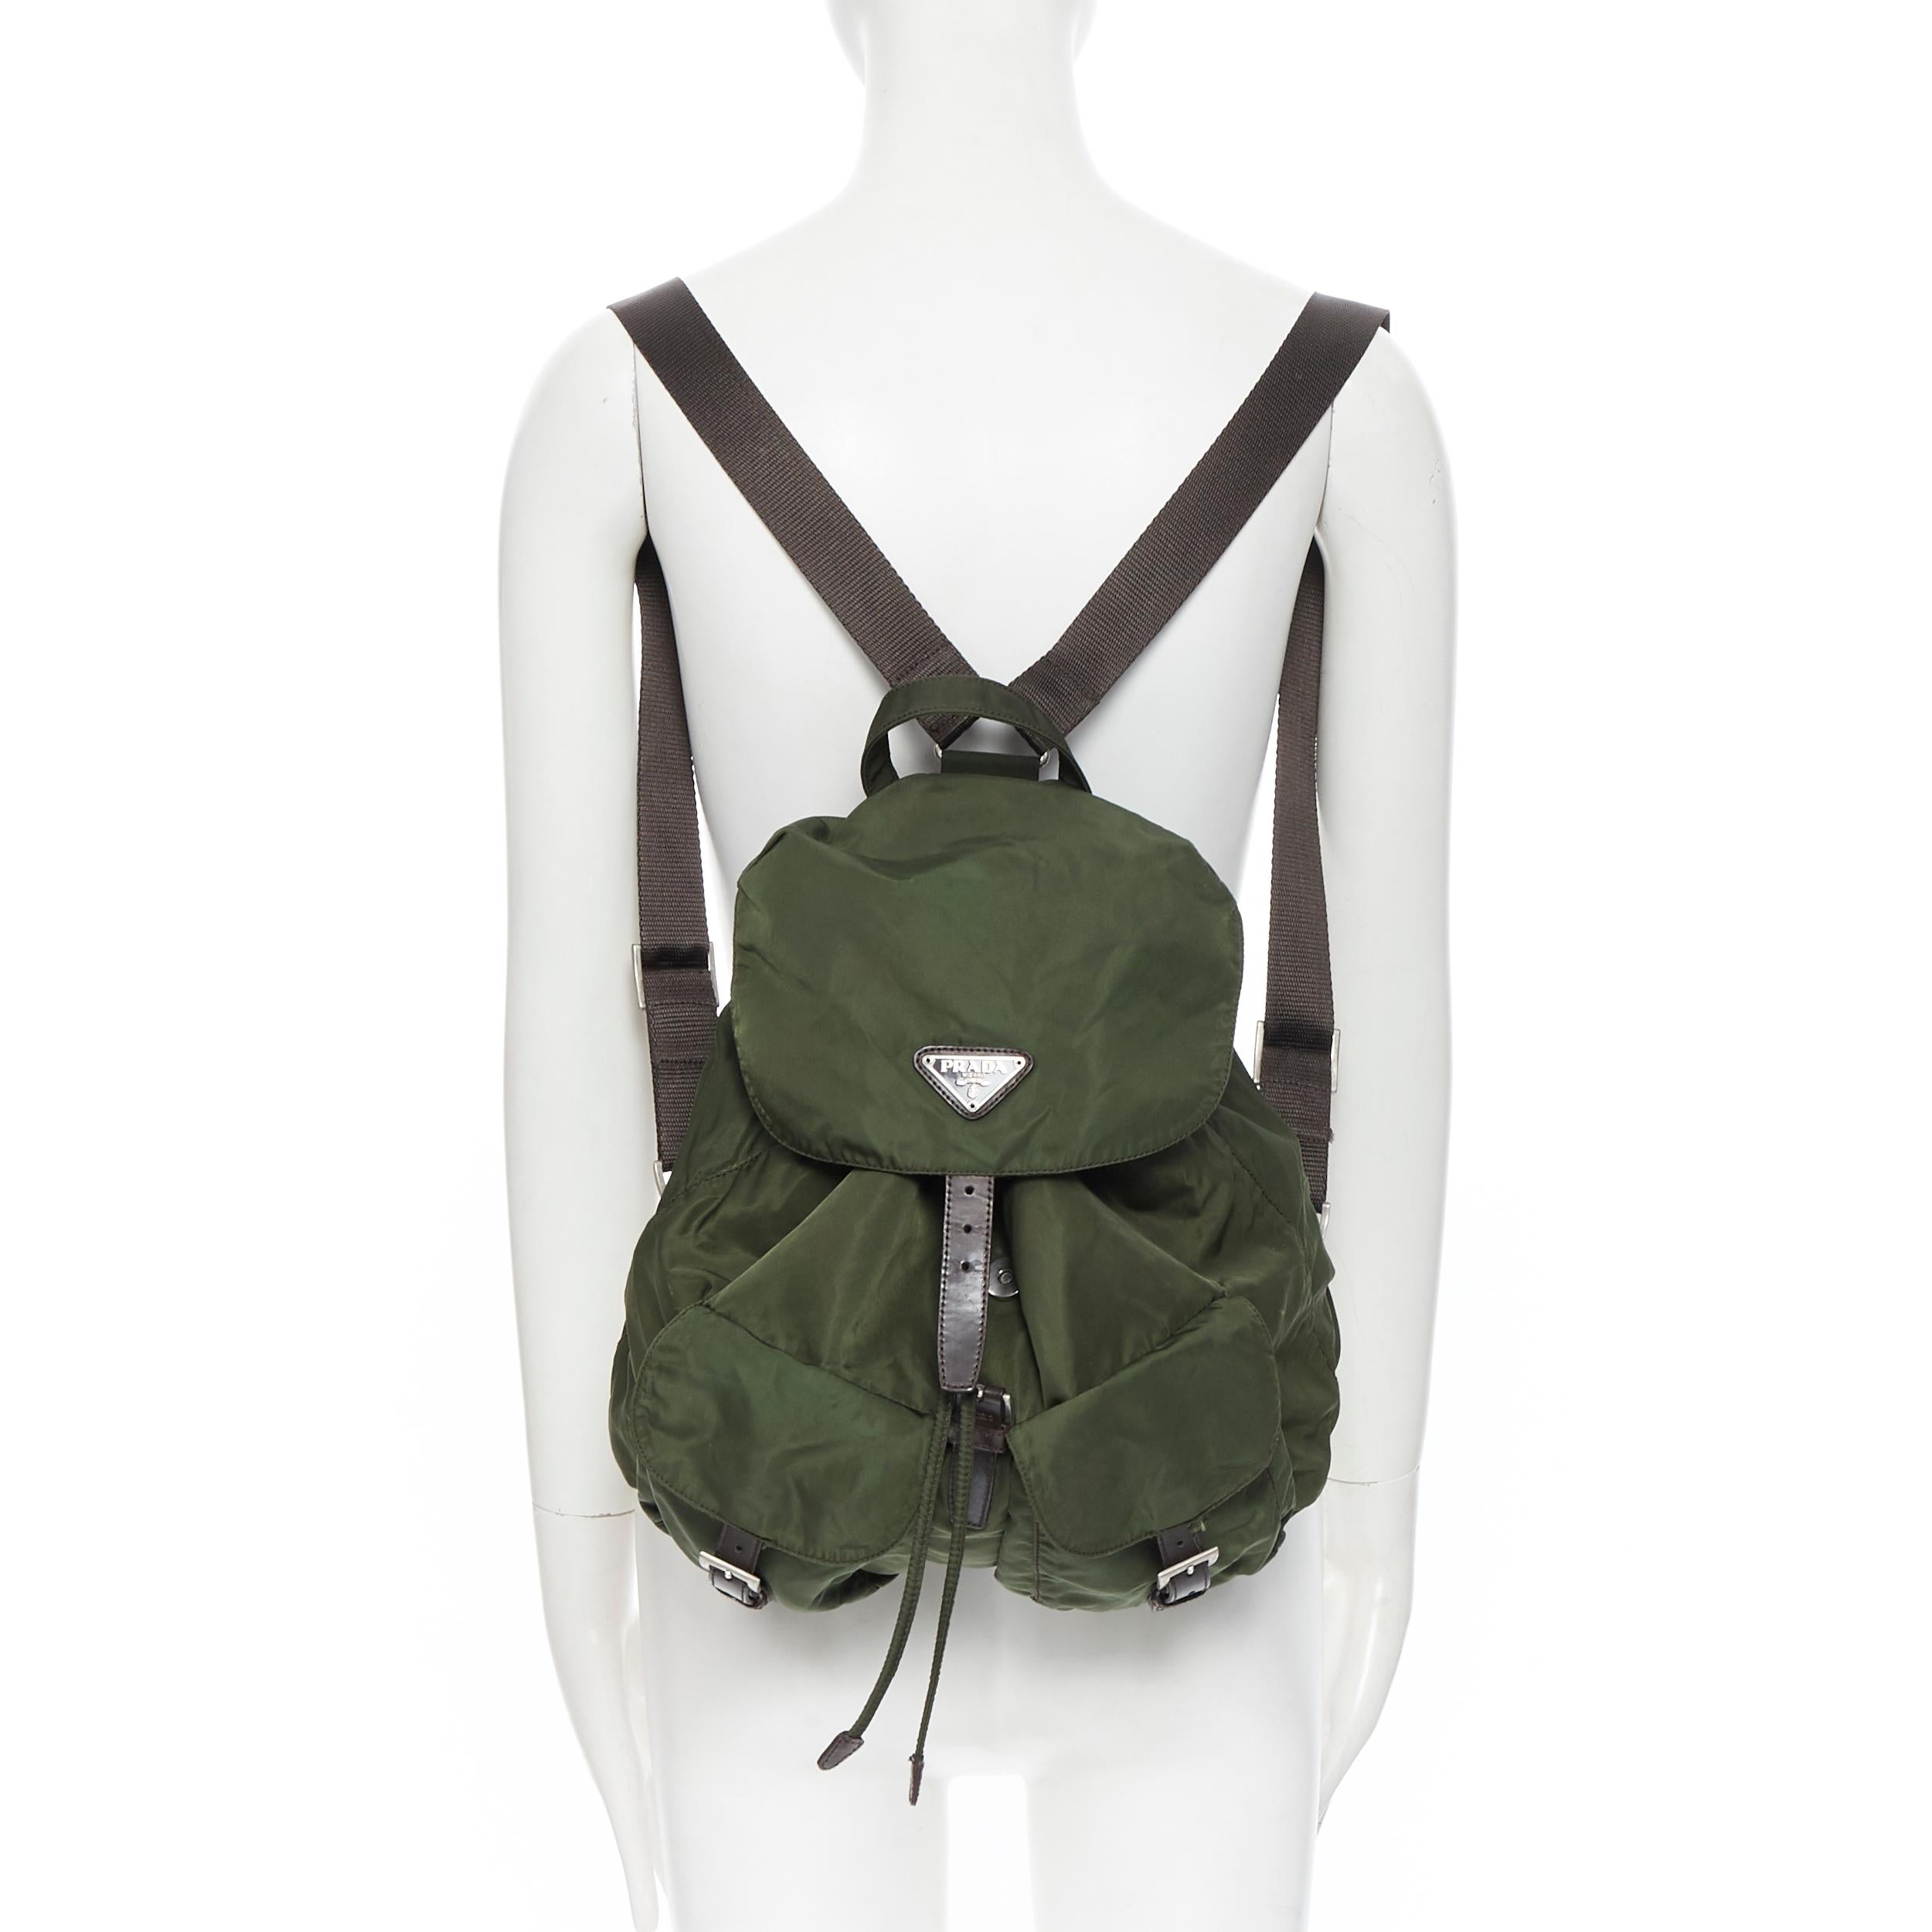 vintage PRADA Tessuto green nylon leather trimmed dual pocket backpack bag
Brand: Prada
Model Name / Style: Nylon backpack
Material: Nylon
Color: Green
Pattern: Solid
Closure: Drawstring
Extra Detail: Drawstring detail. Dual front pocket. Leather